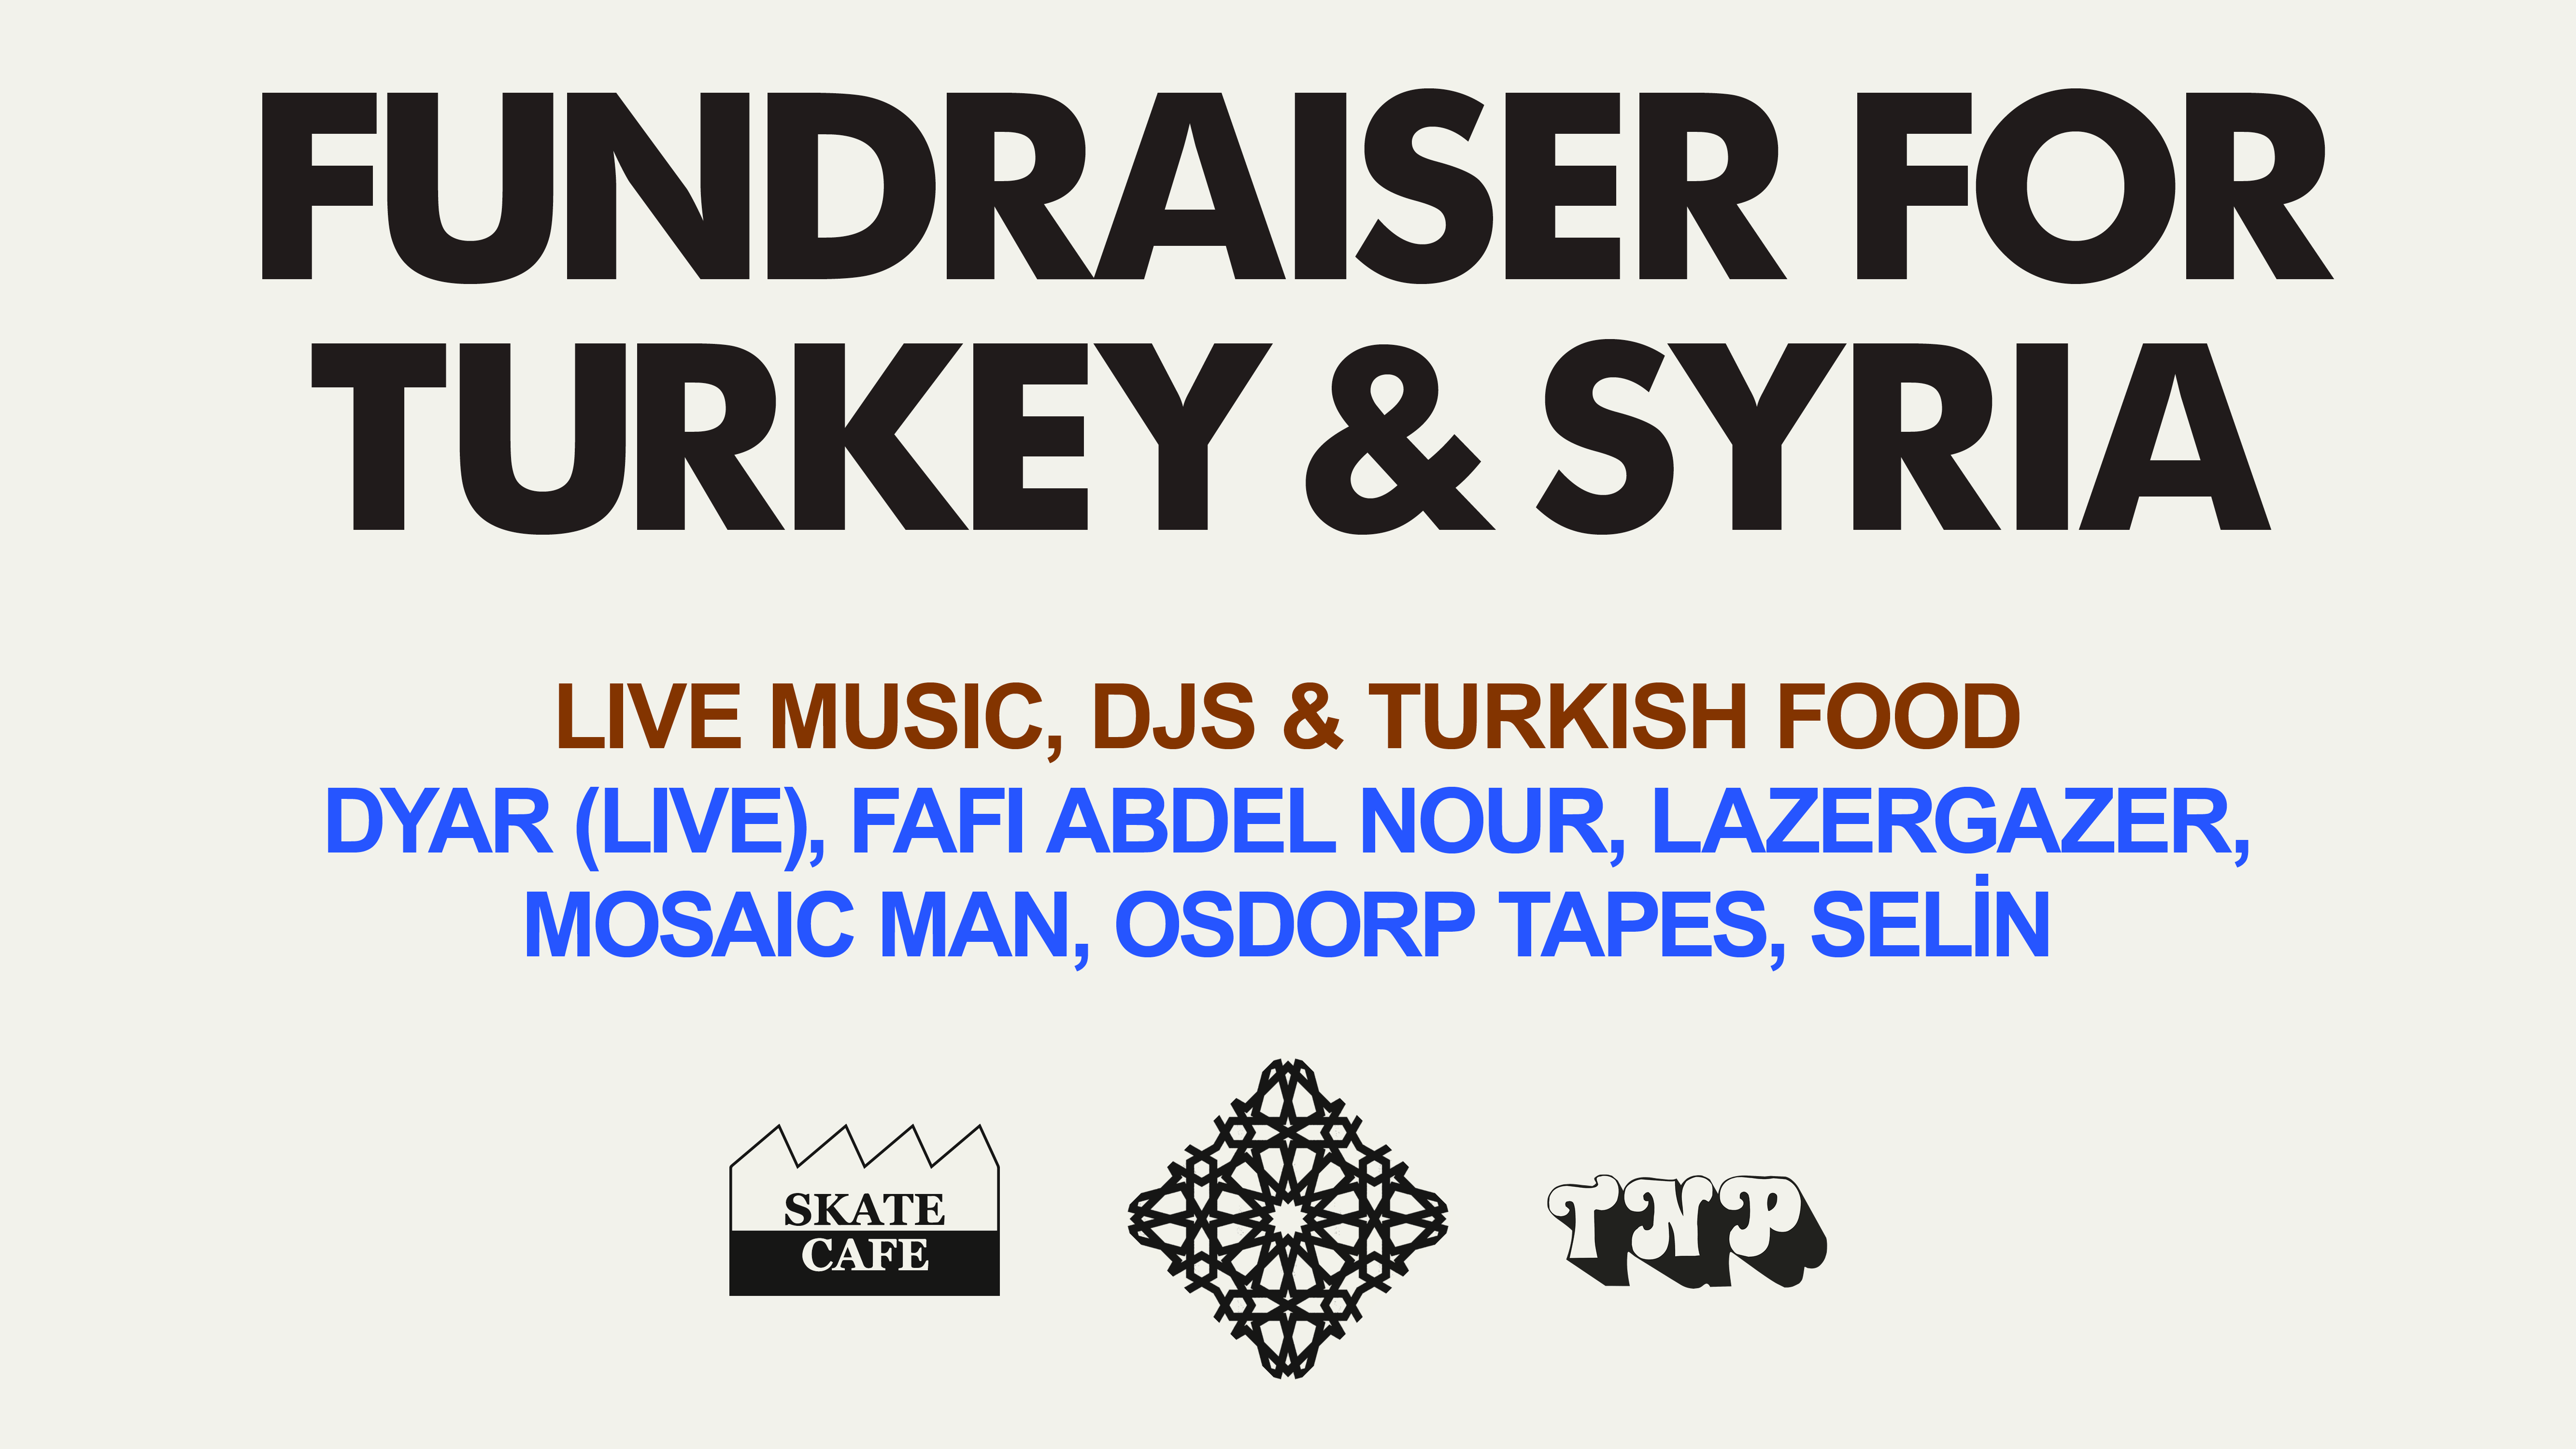 FUNDRAISER FOR TURKEY & SYRIA | DYAR (LIVE), LAZERGAZER, MOSAIC MAN, OSDORP TAPES, SELIN header